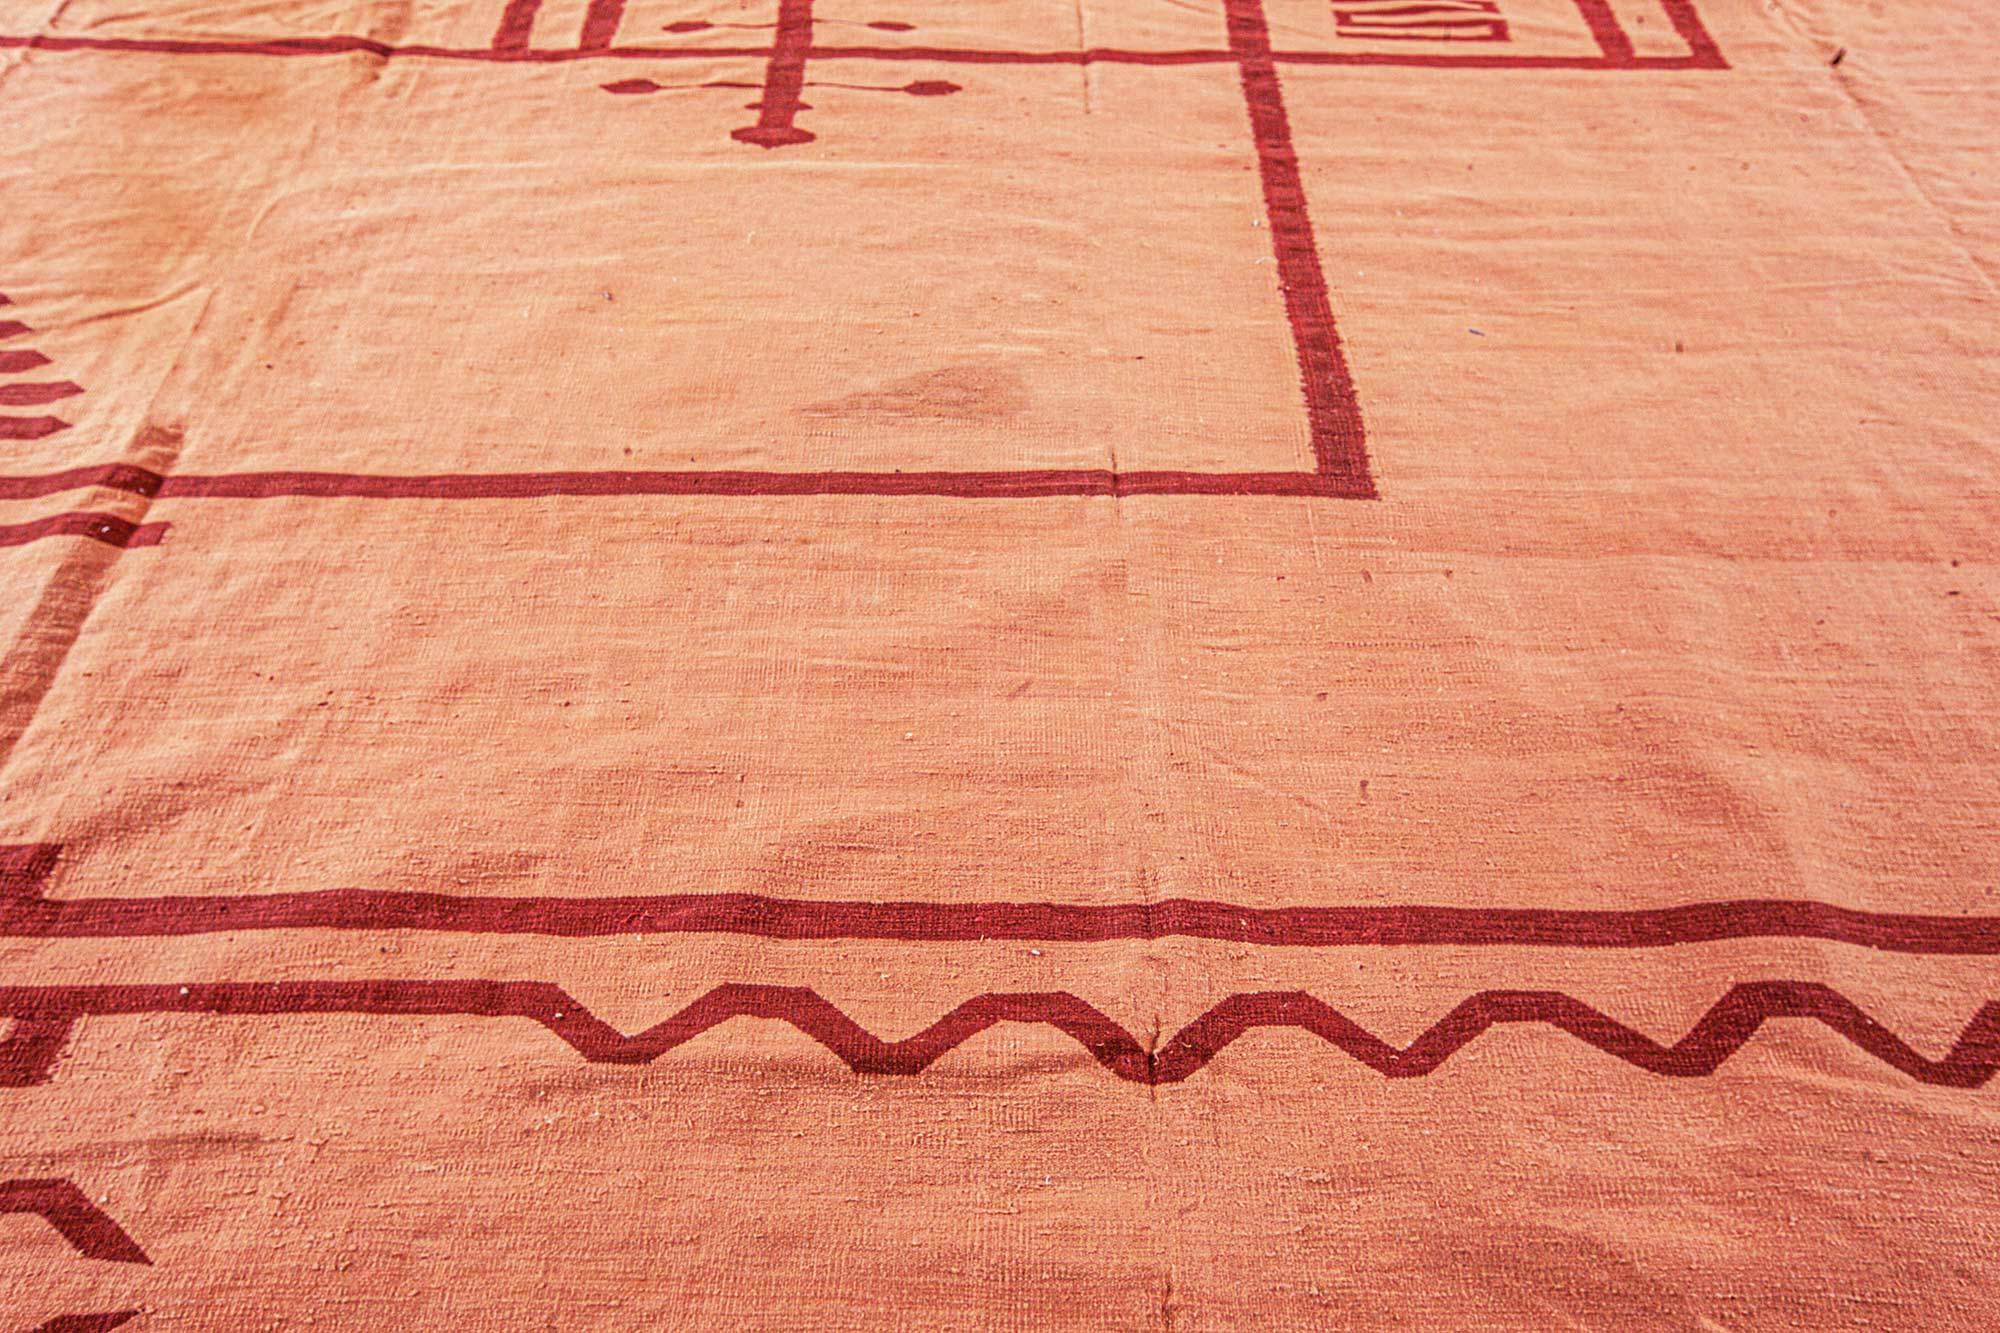 Vintage Indian Dhurrie rug
Size: 17'7